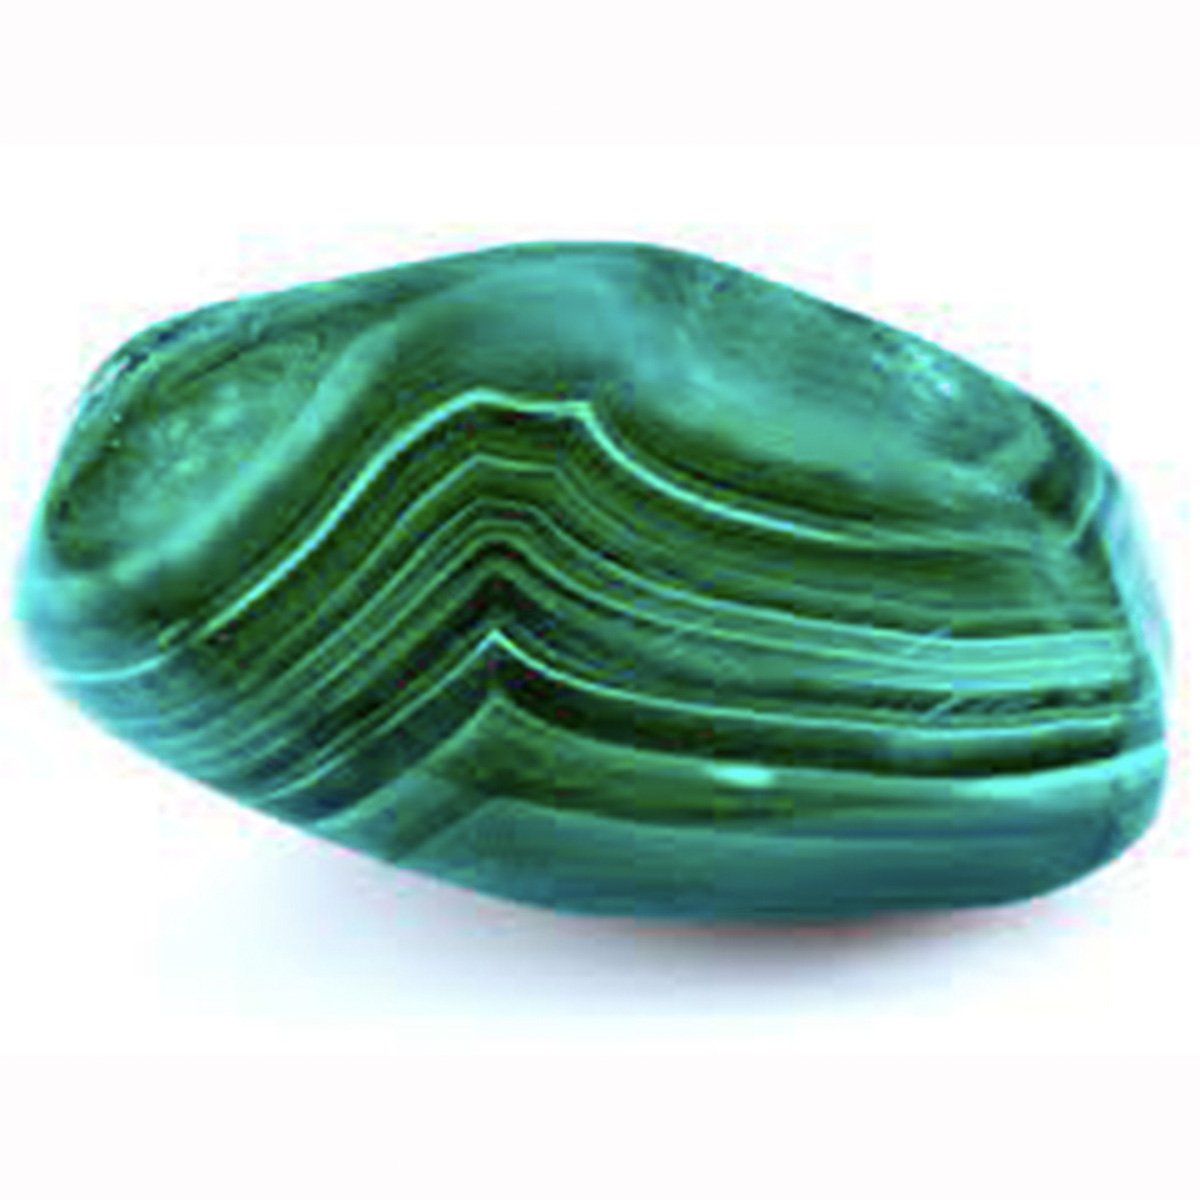 Malachite stone